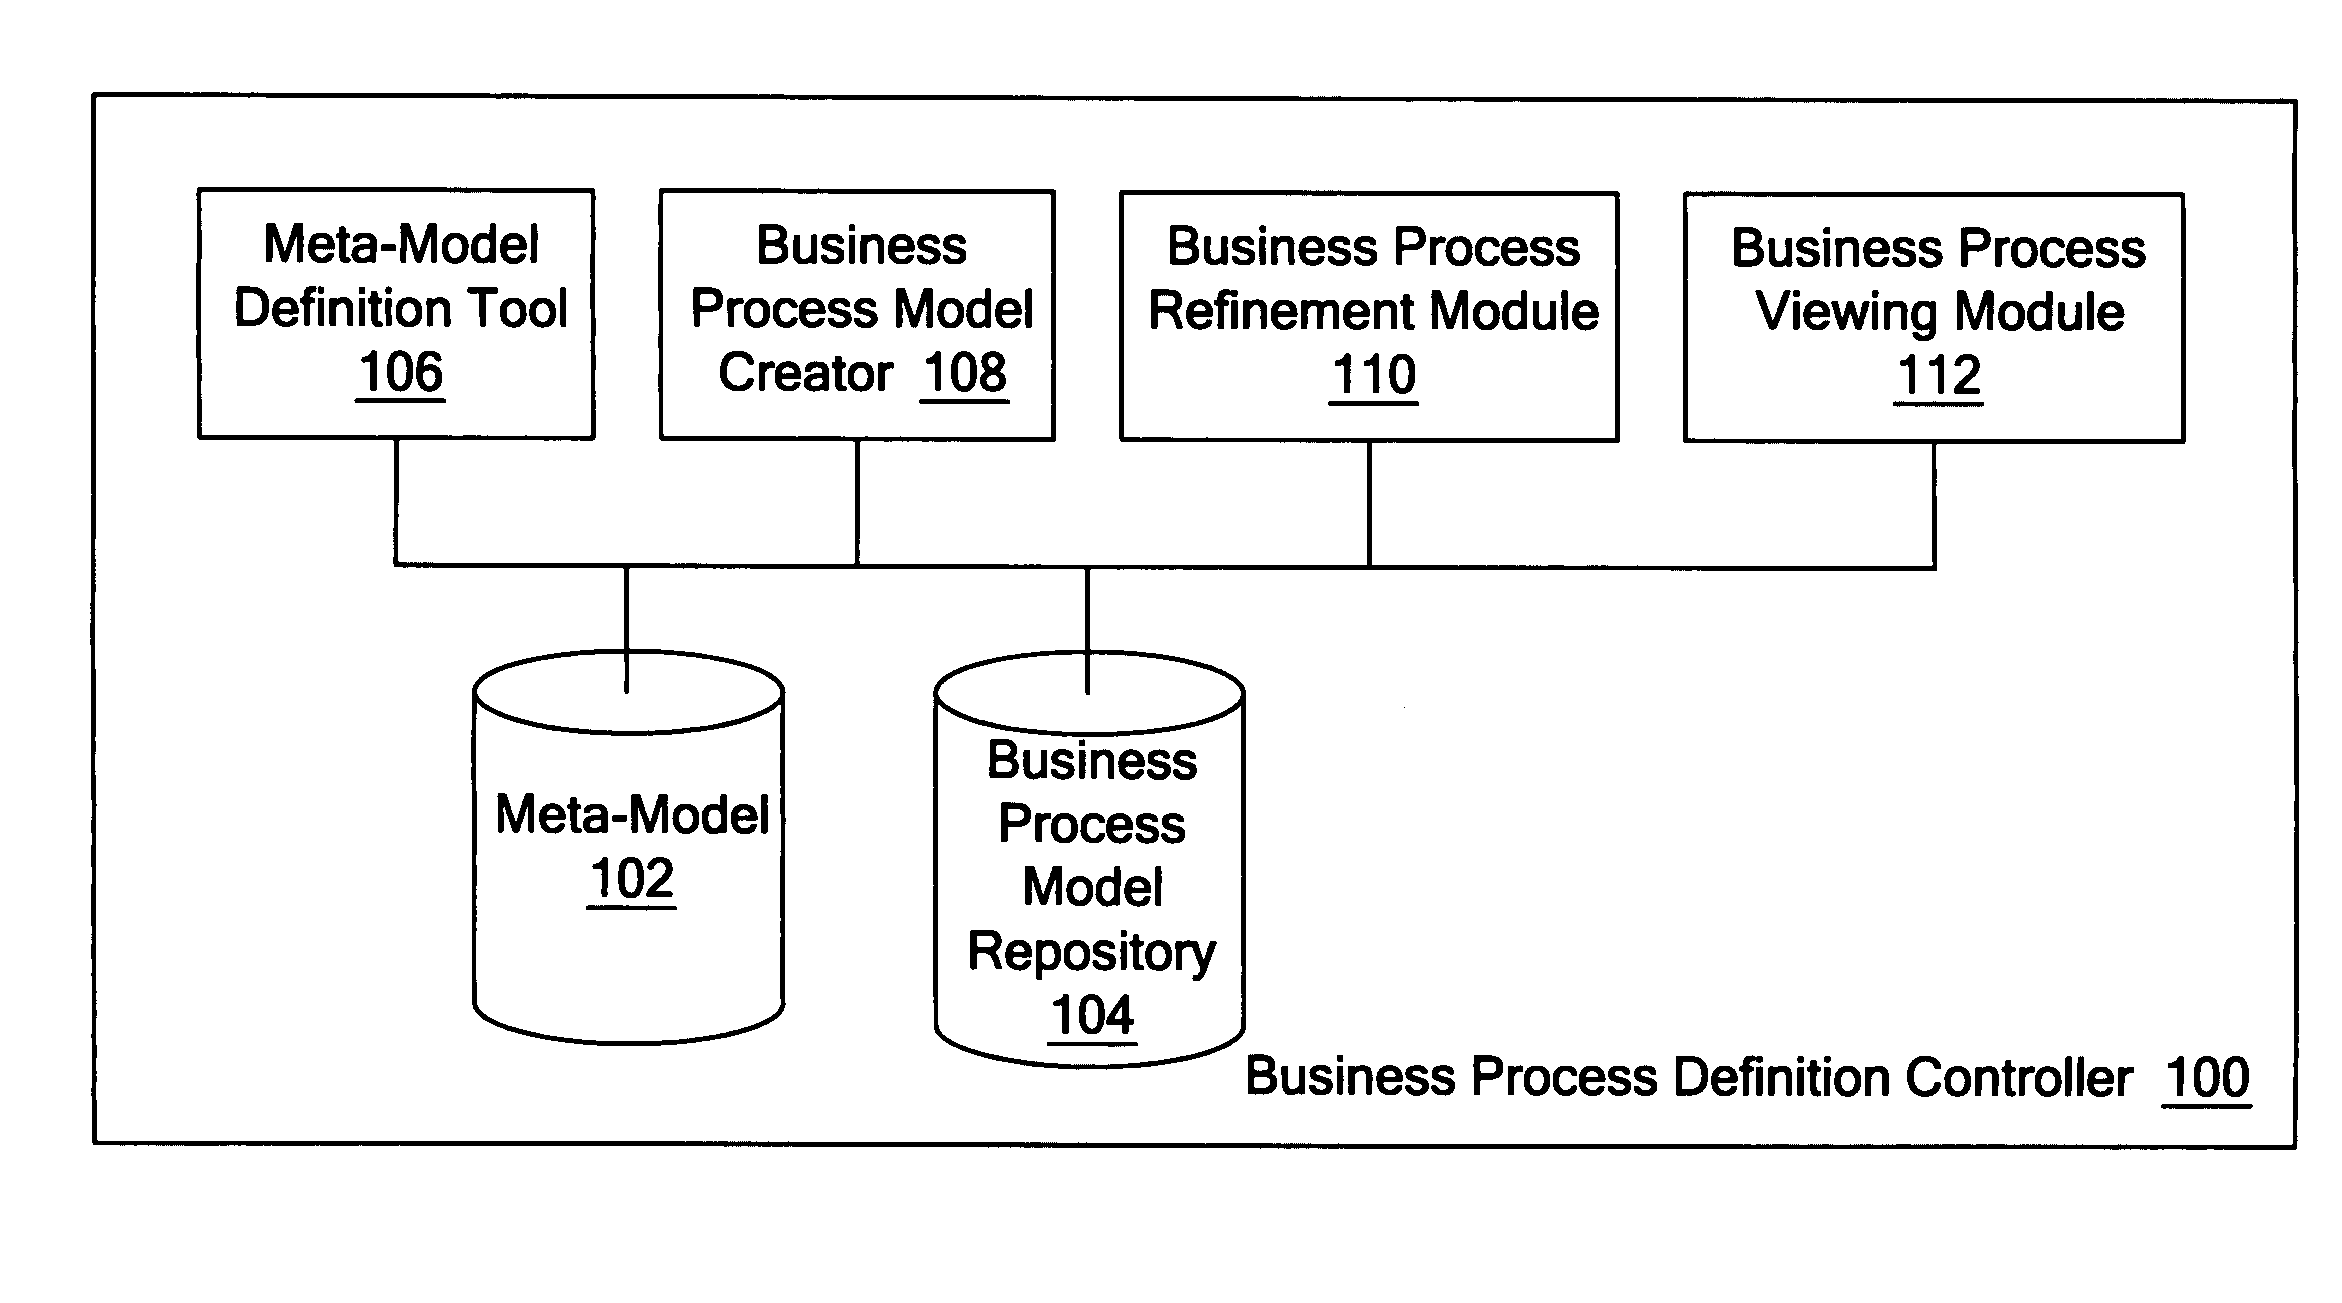 Progressive refinement model for business processes